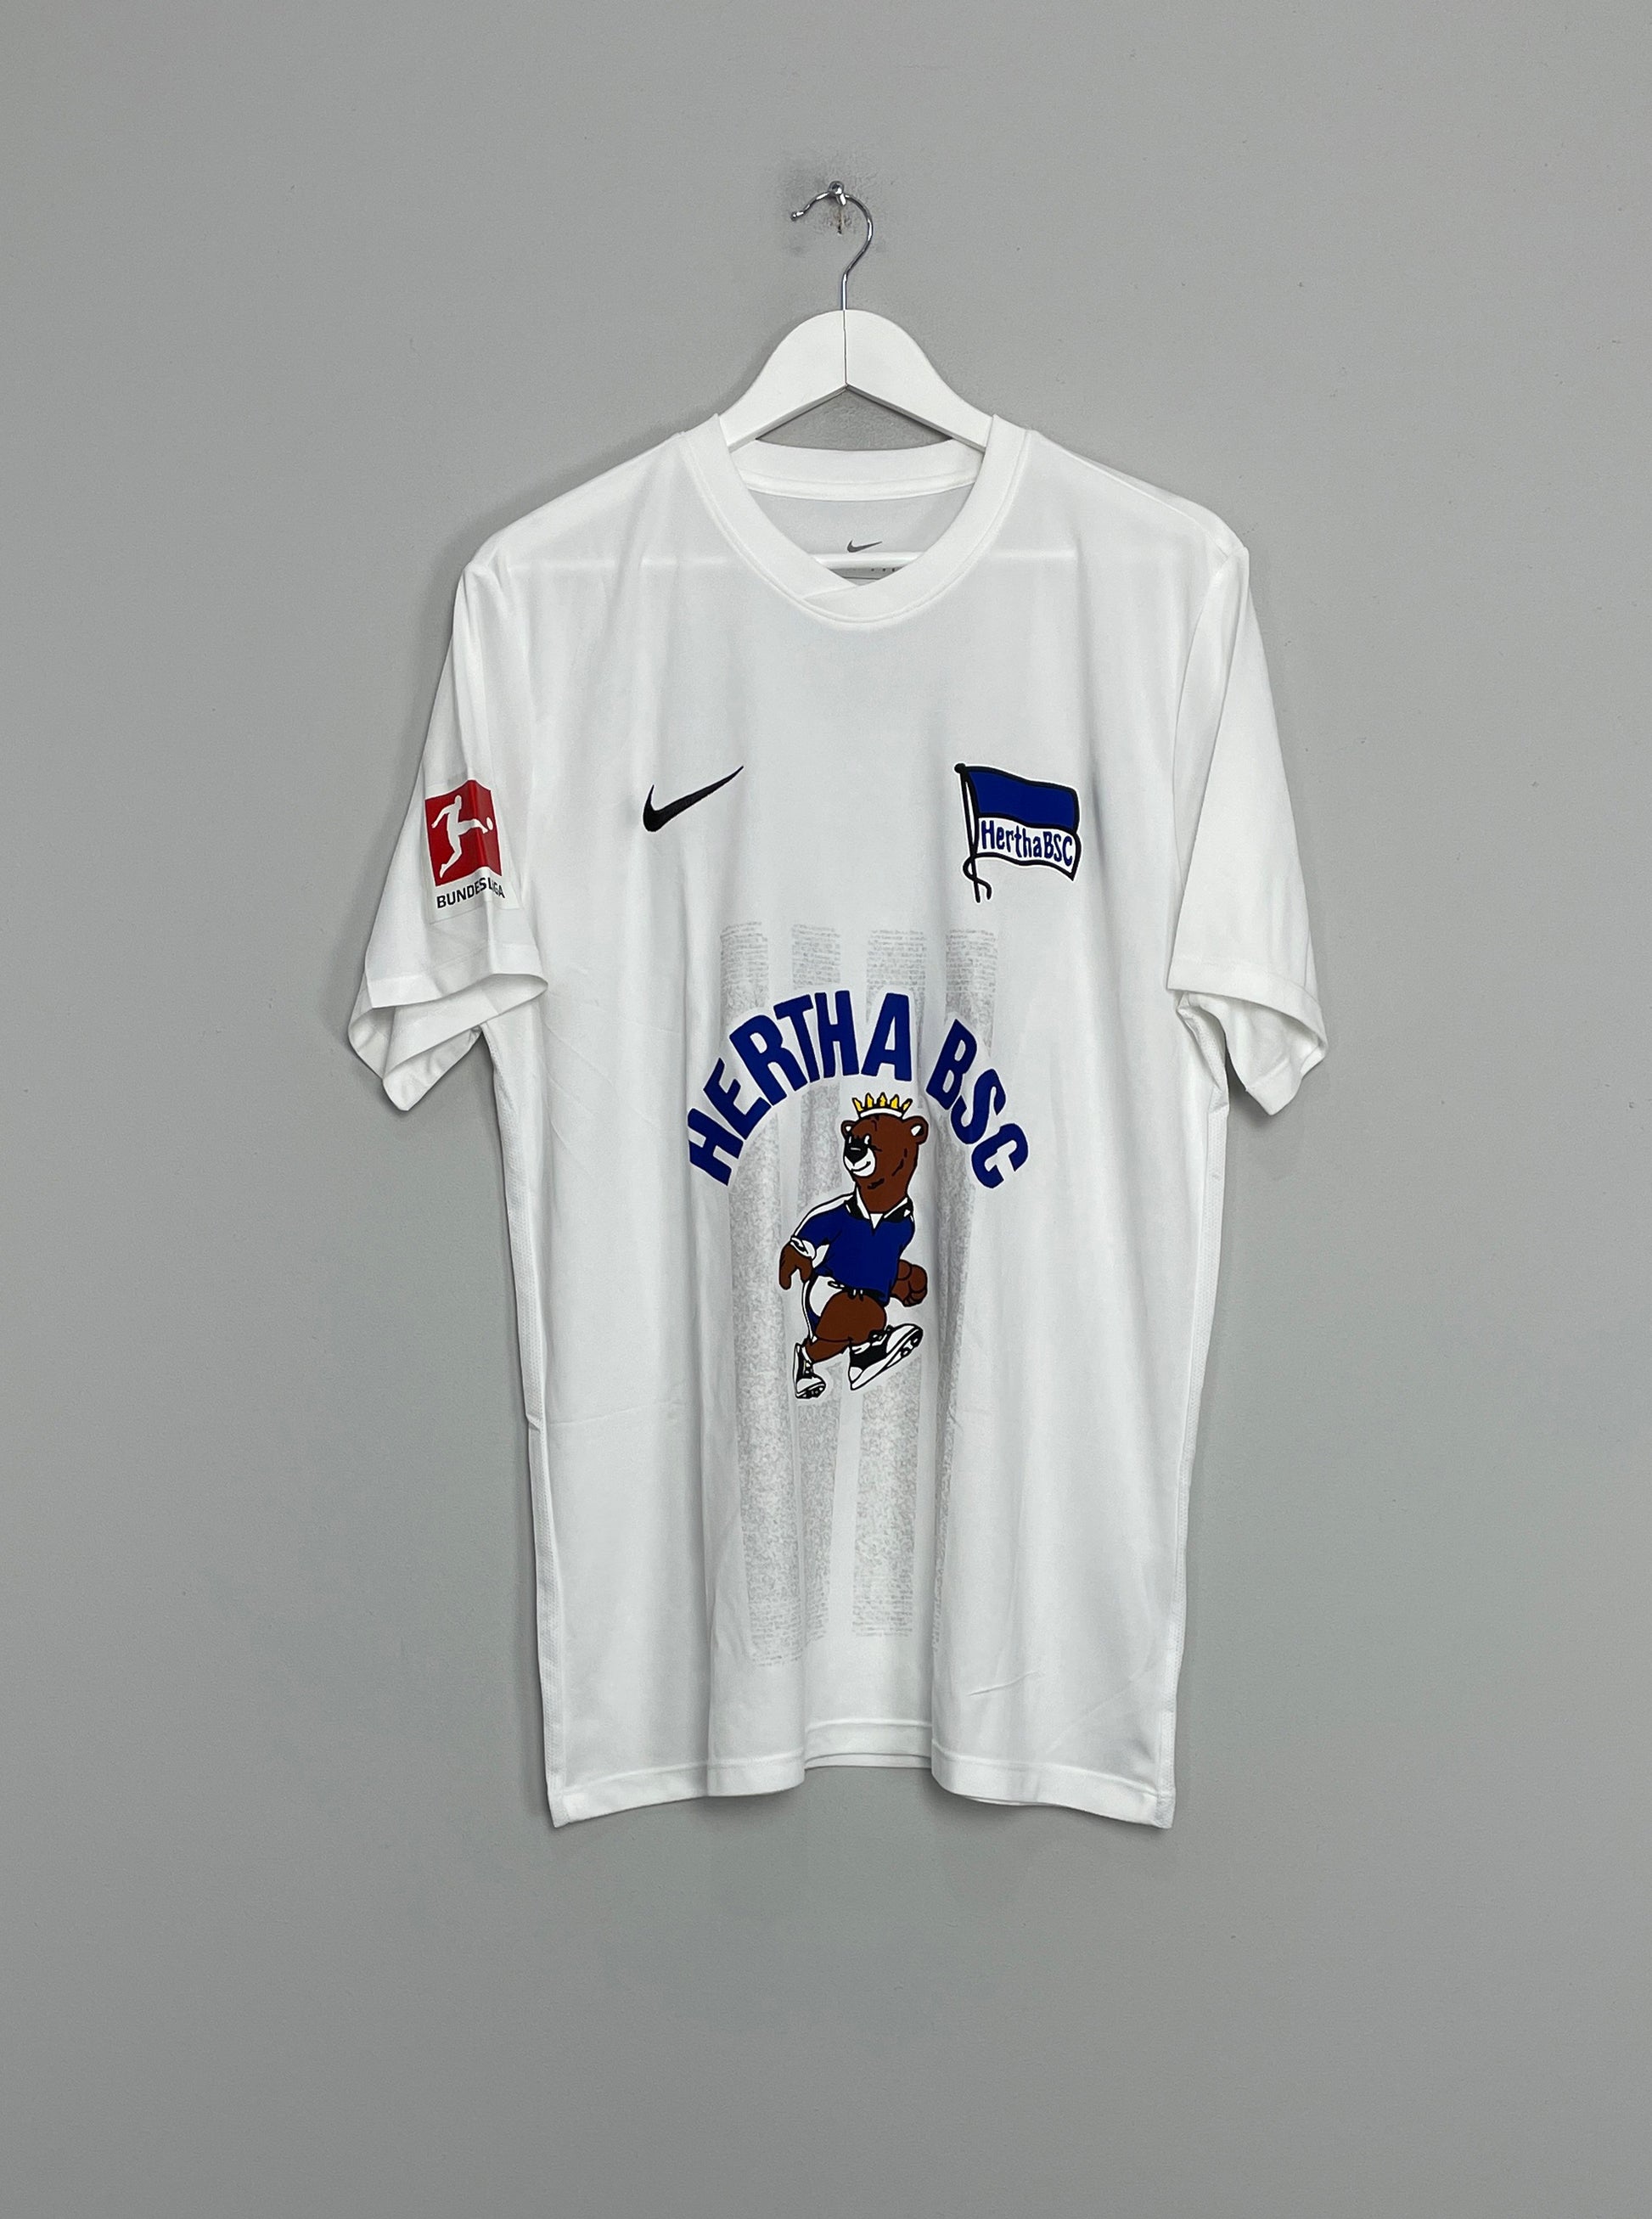 Image of the 2019/20 Hertha Berlin Berlin Wall shirt from the 2019/20 season